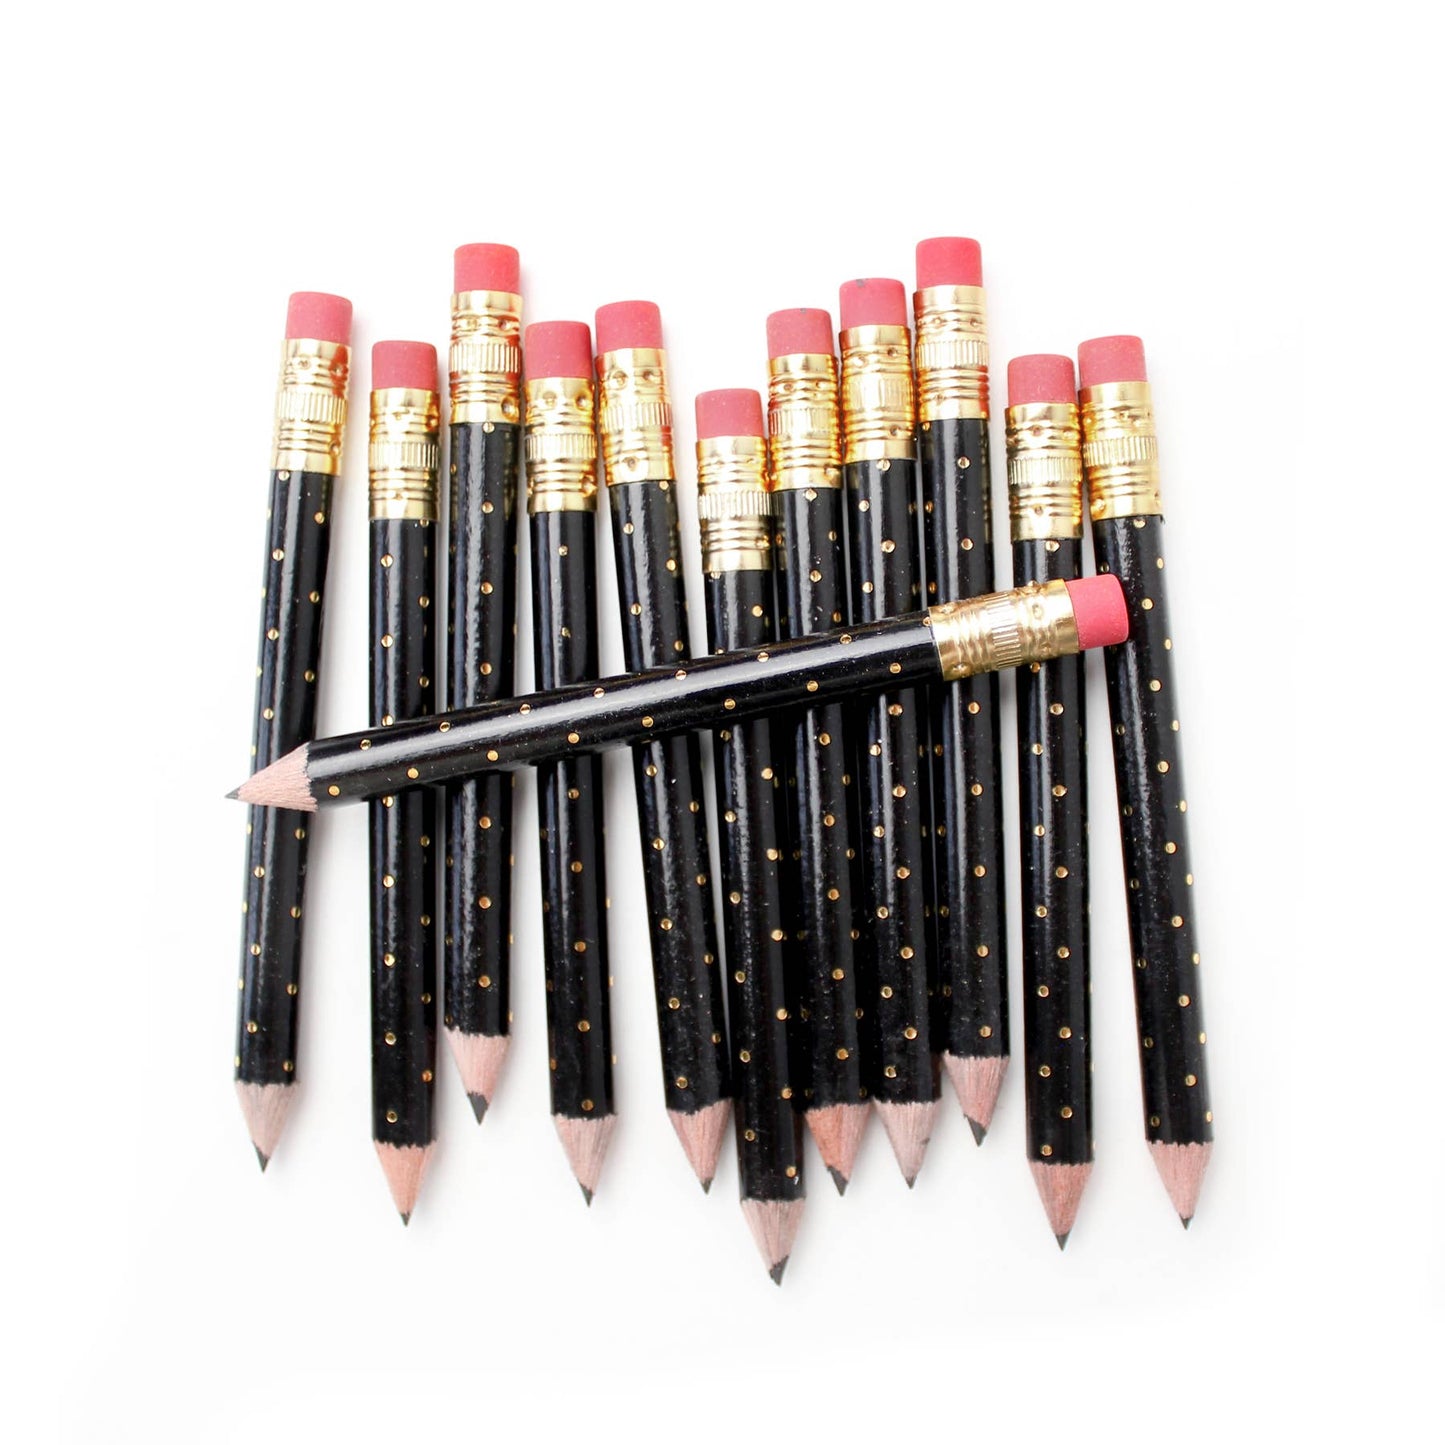 12 mini black pencils with gold foil polka dots.